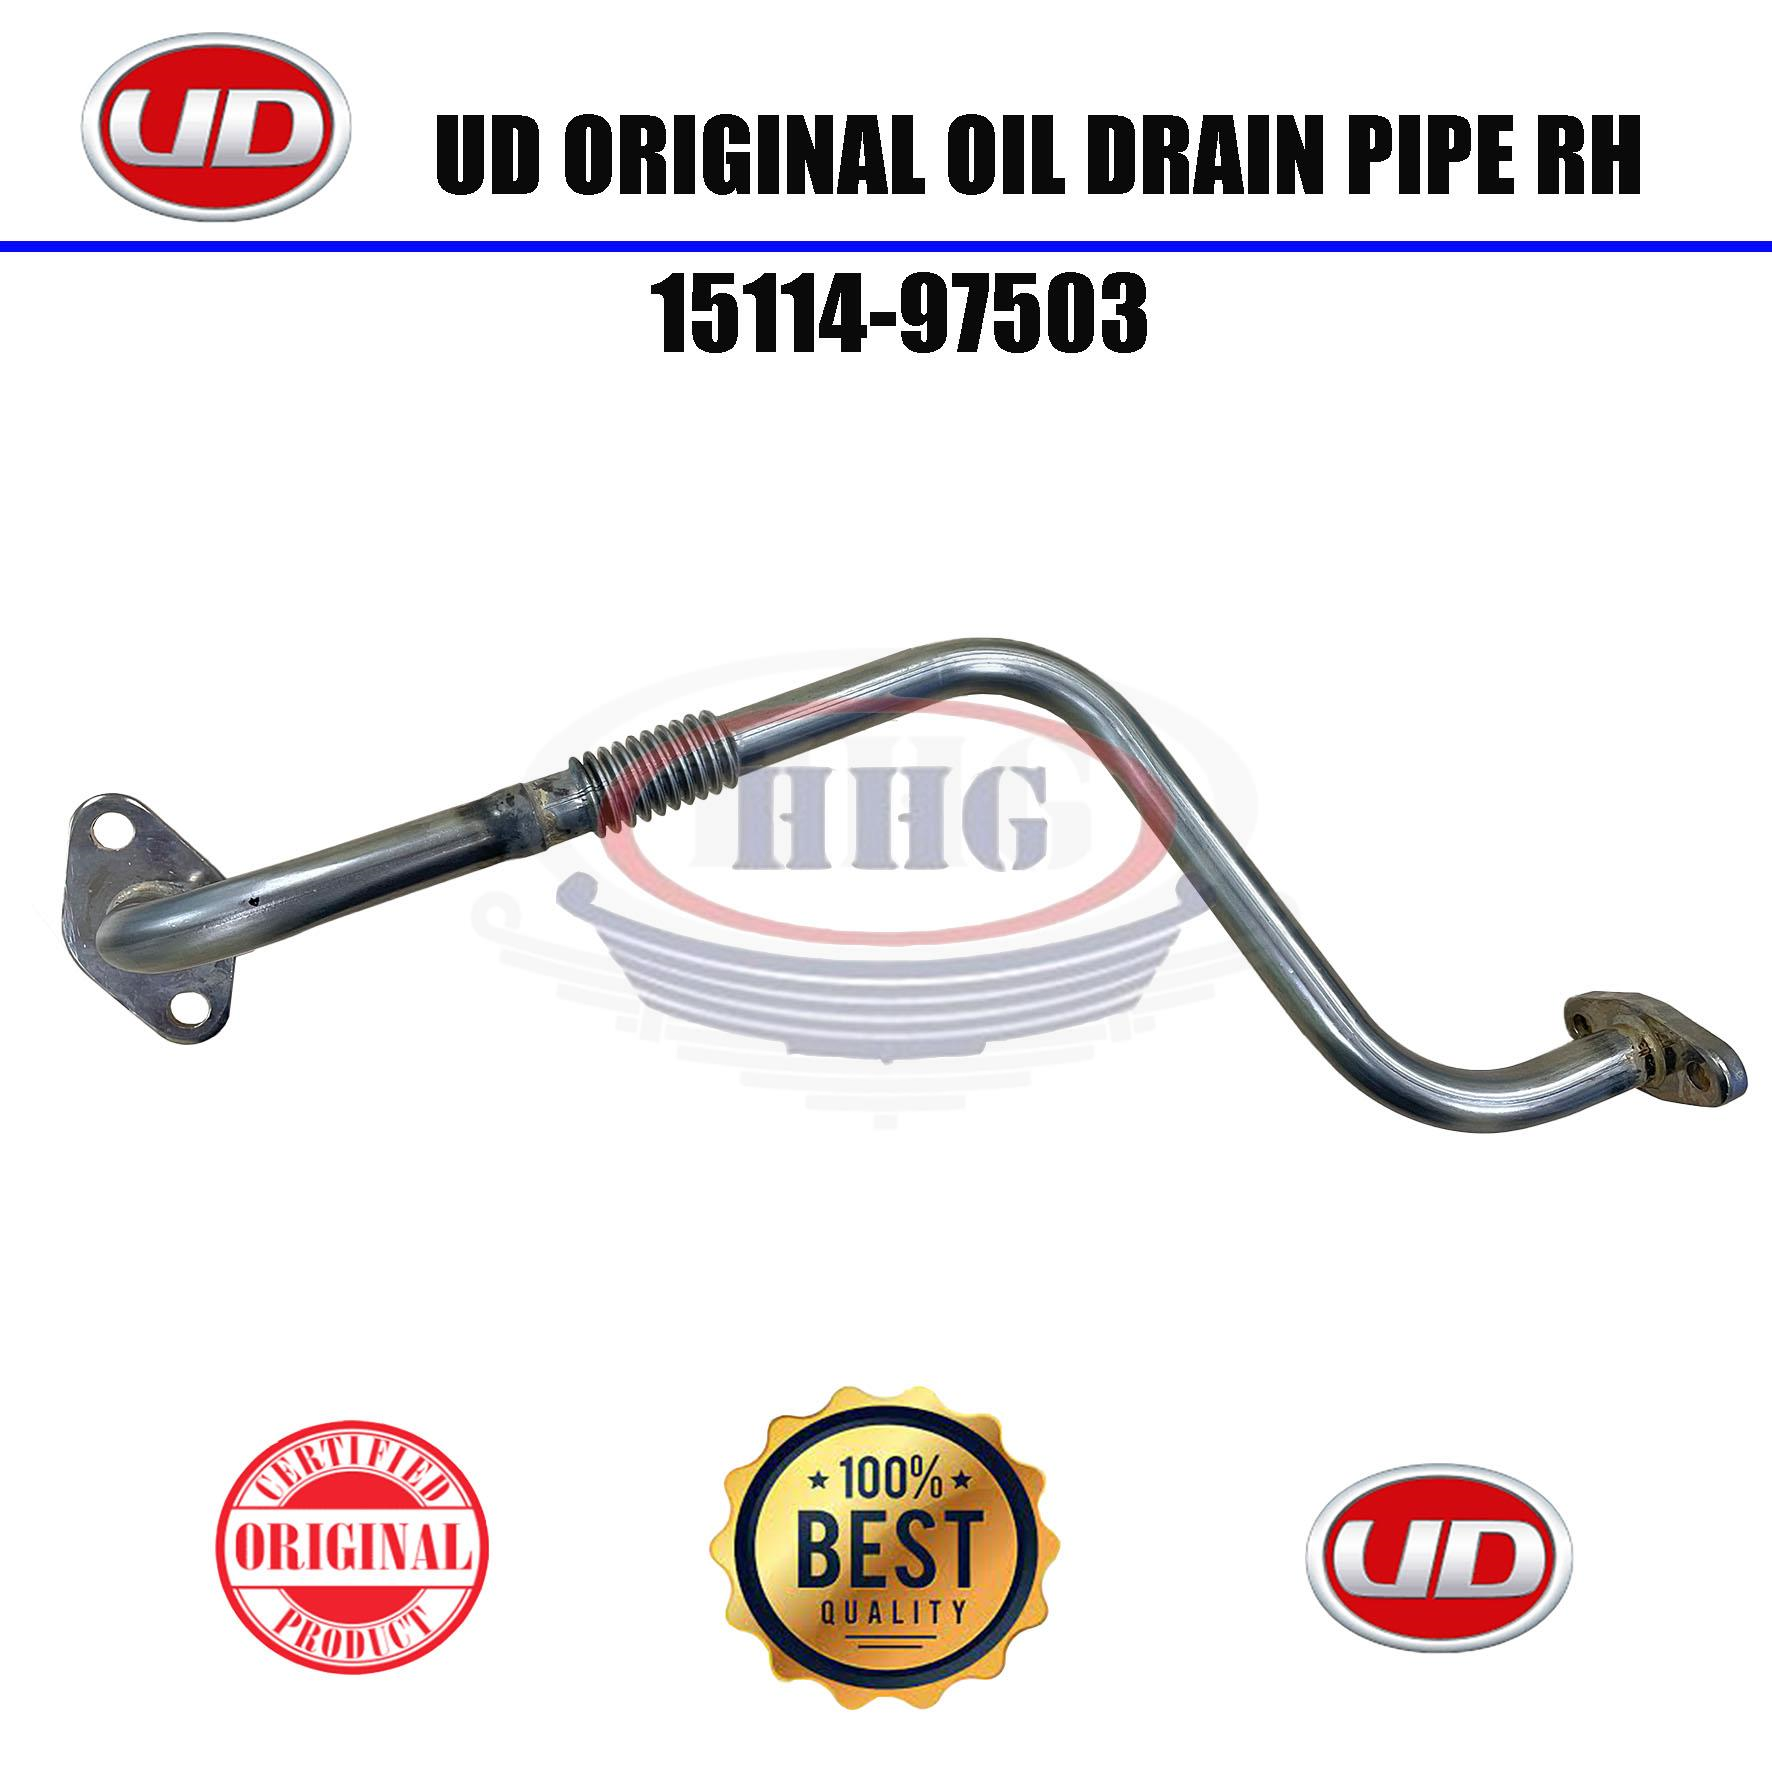 UD Original RF8T Oil Drain Pipe RH (15114-97503)